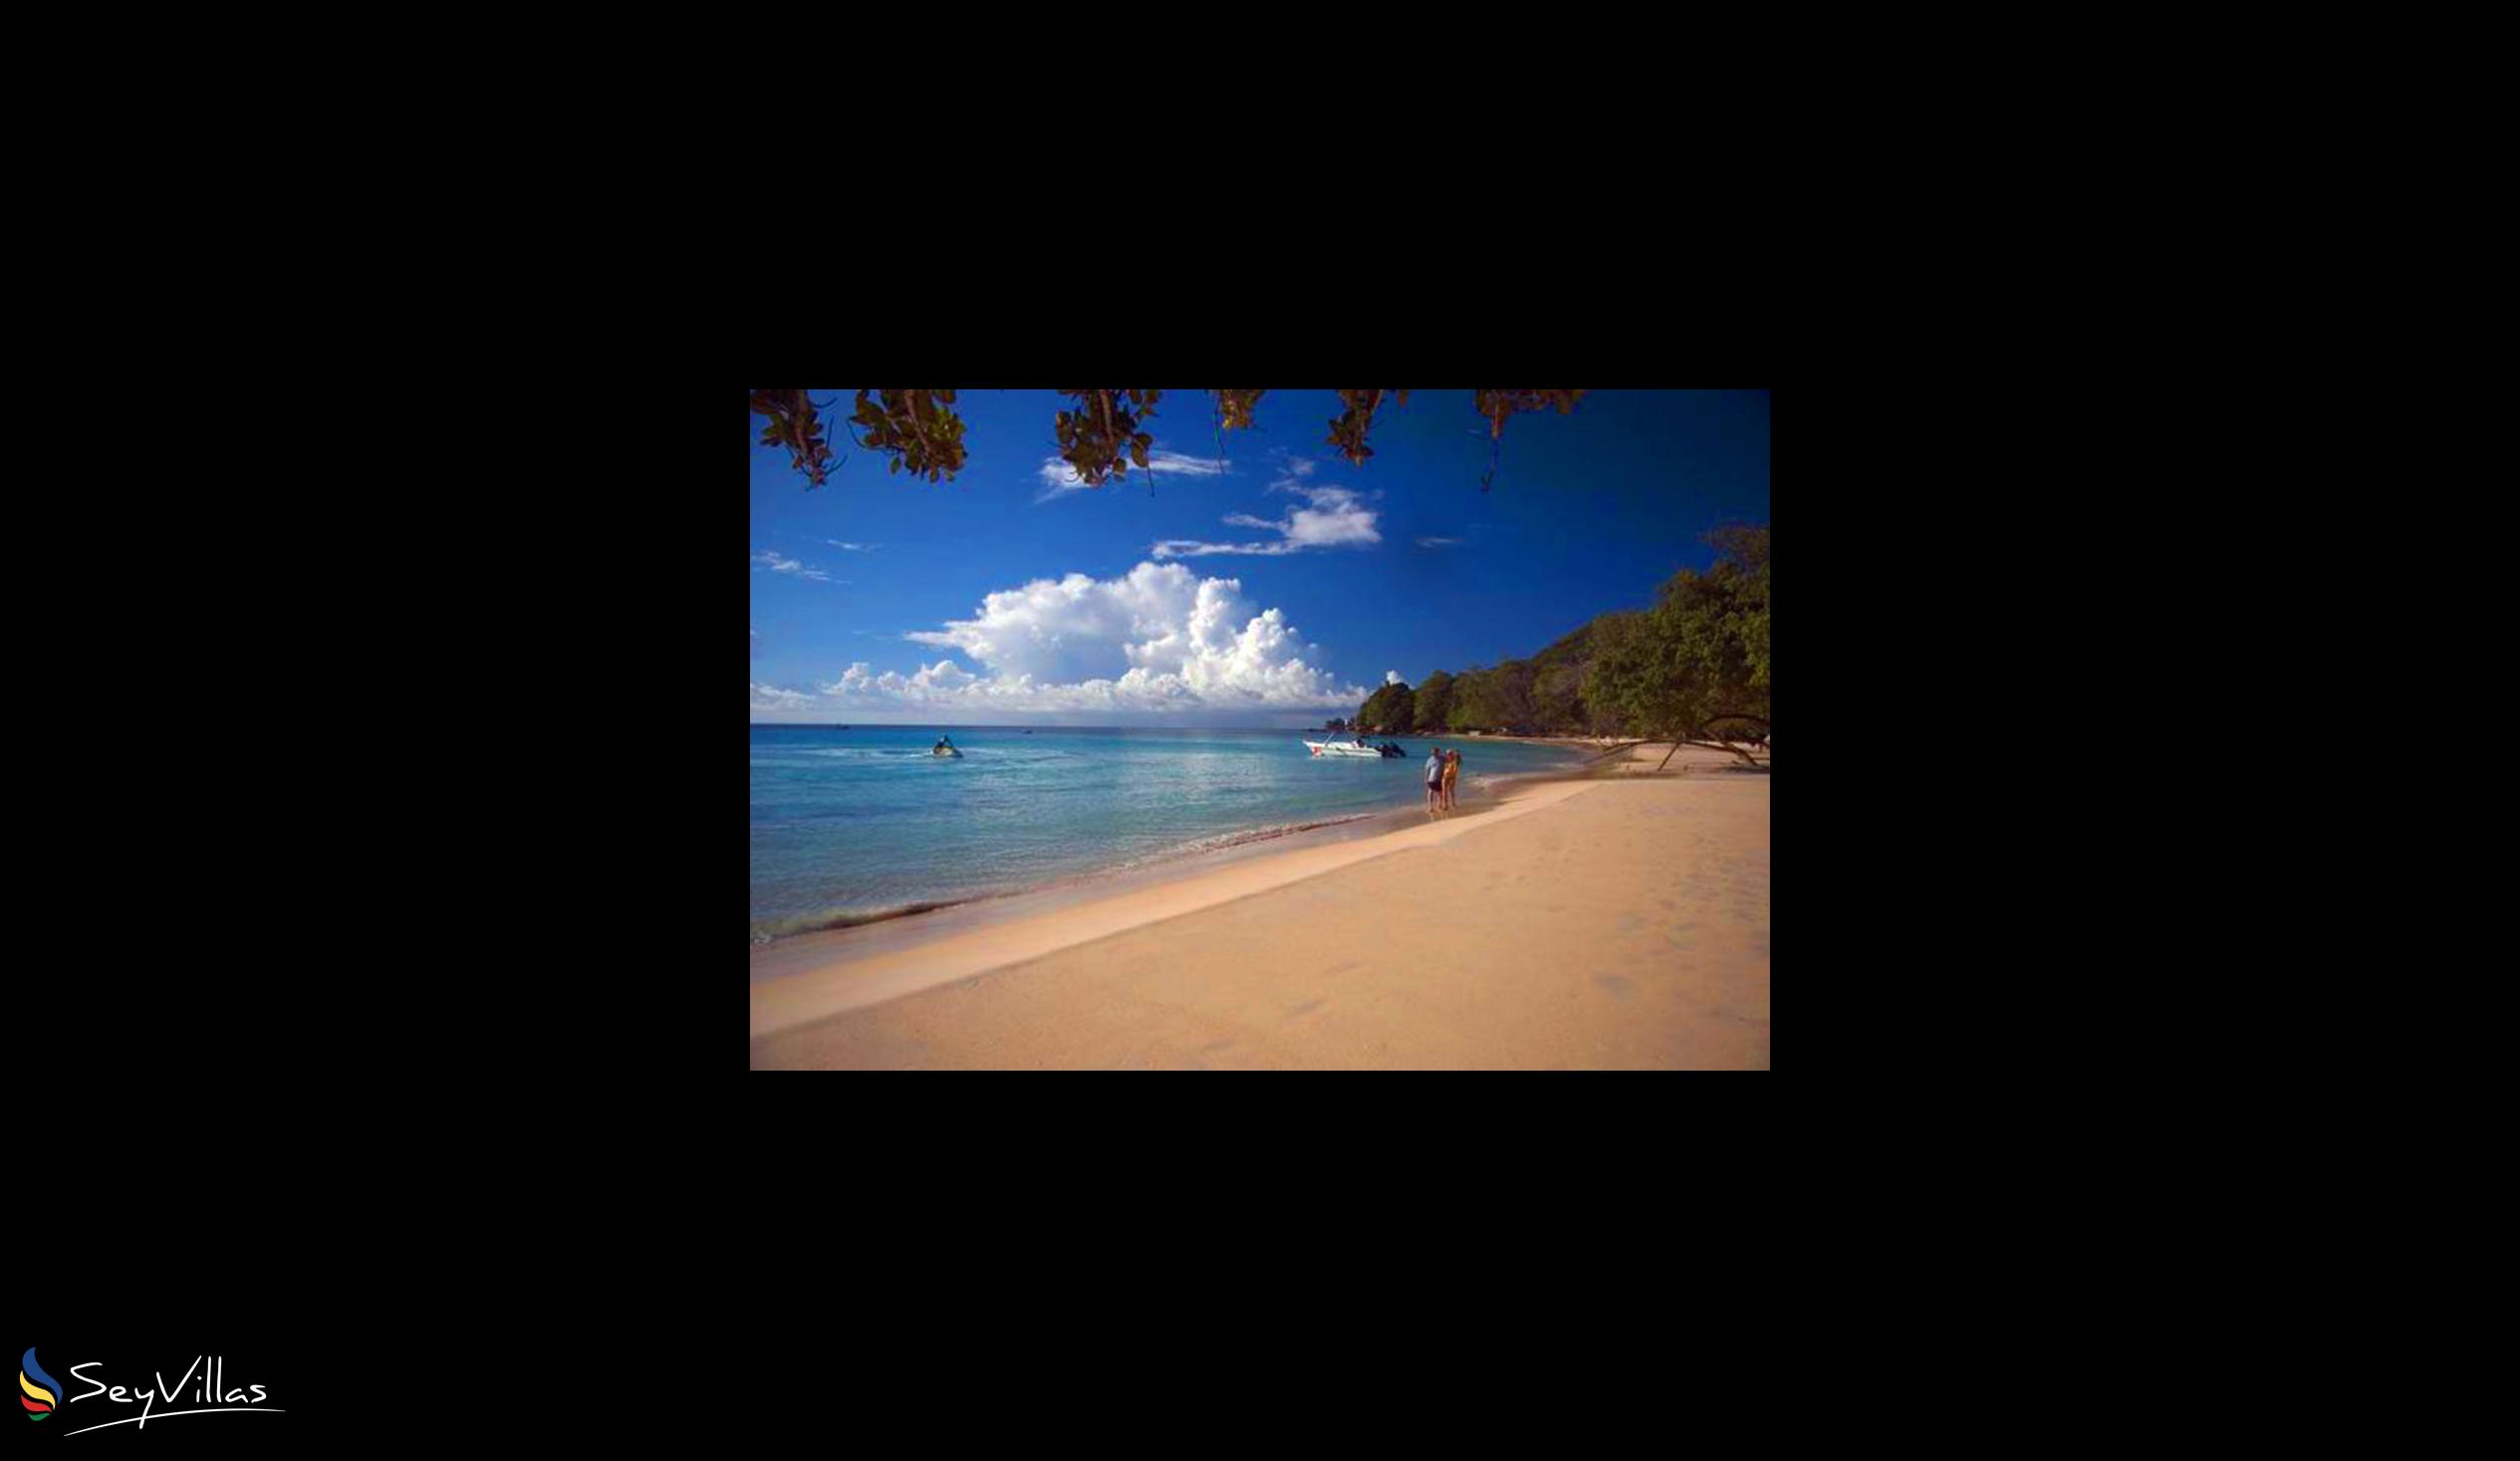 Photo 29: Row's Villa - Beaches - Mahé (Seychelles)